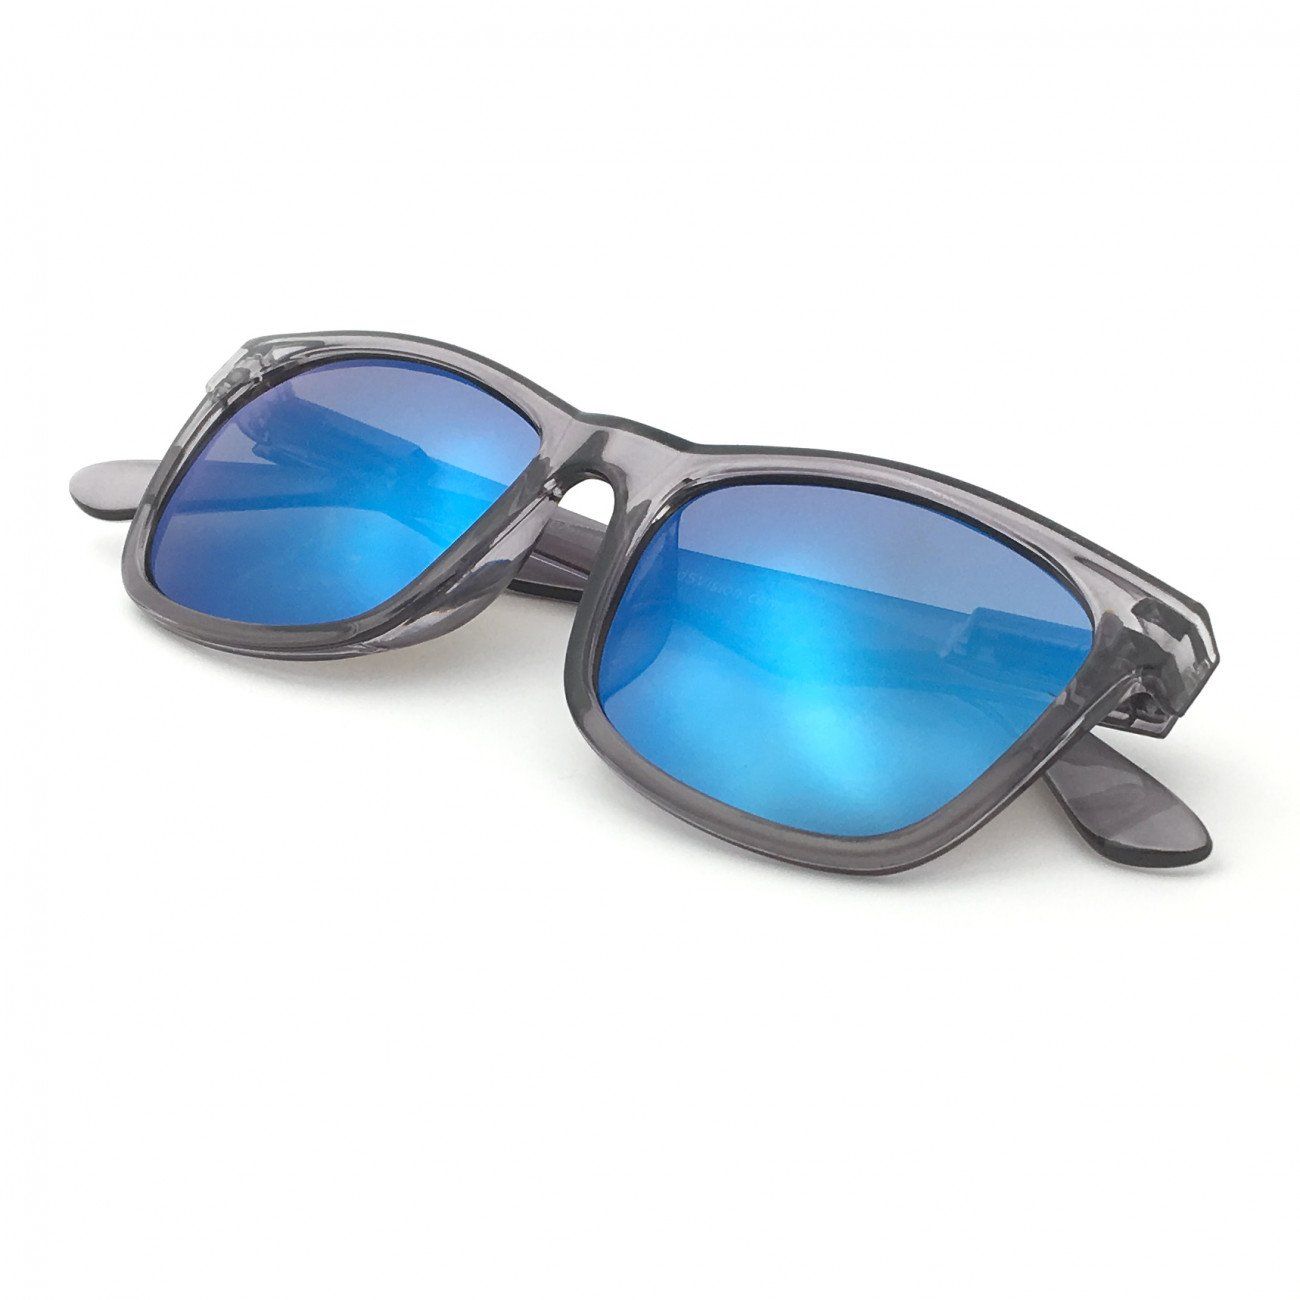 J+S Classic 80's Wayfarer Mark II Sunglasses, Polarized, 100% UV